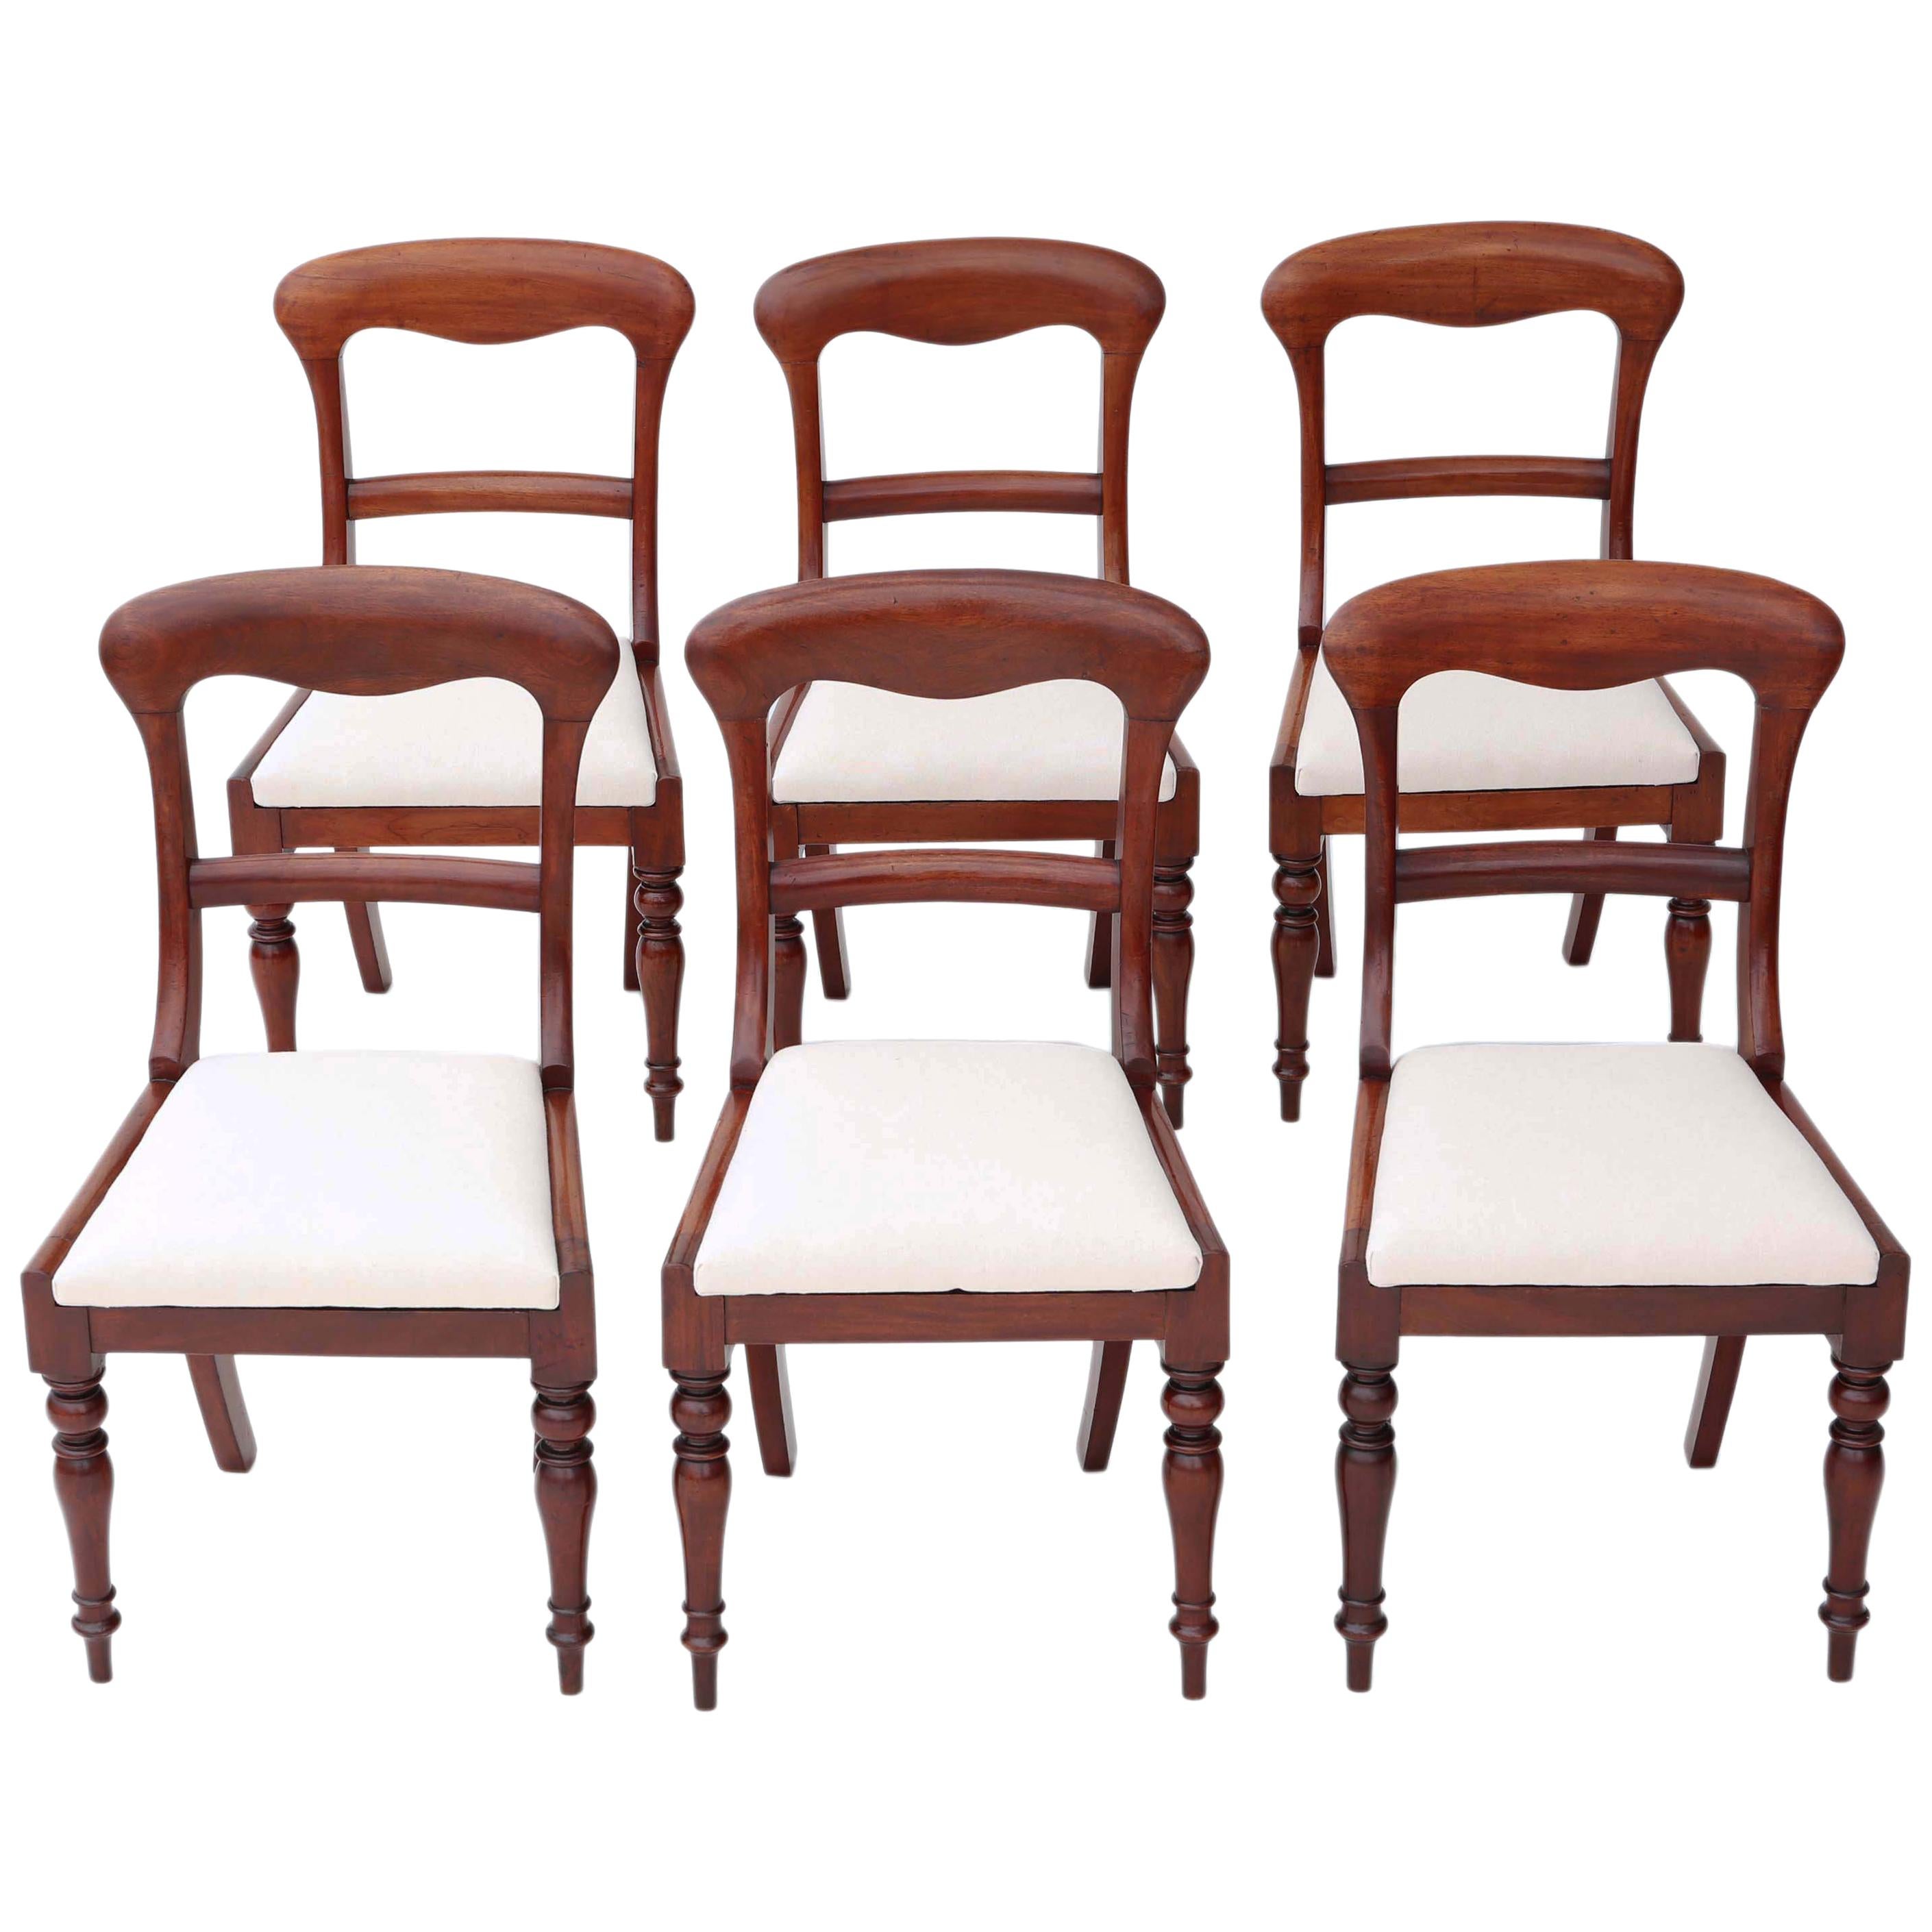 Set of 6 Victorian Mahogany Dining Chairs, circa 1850